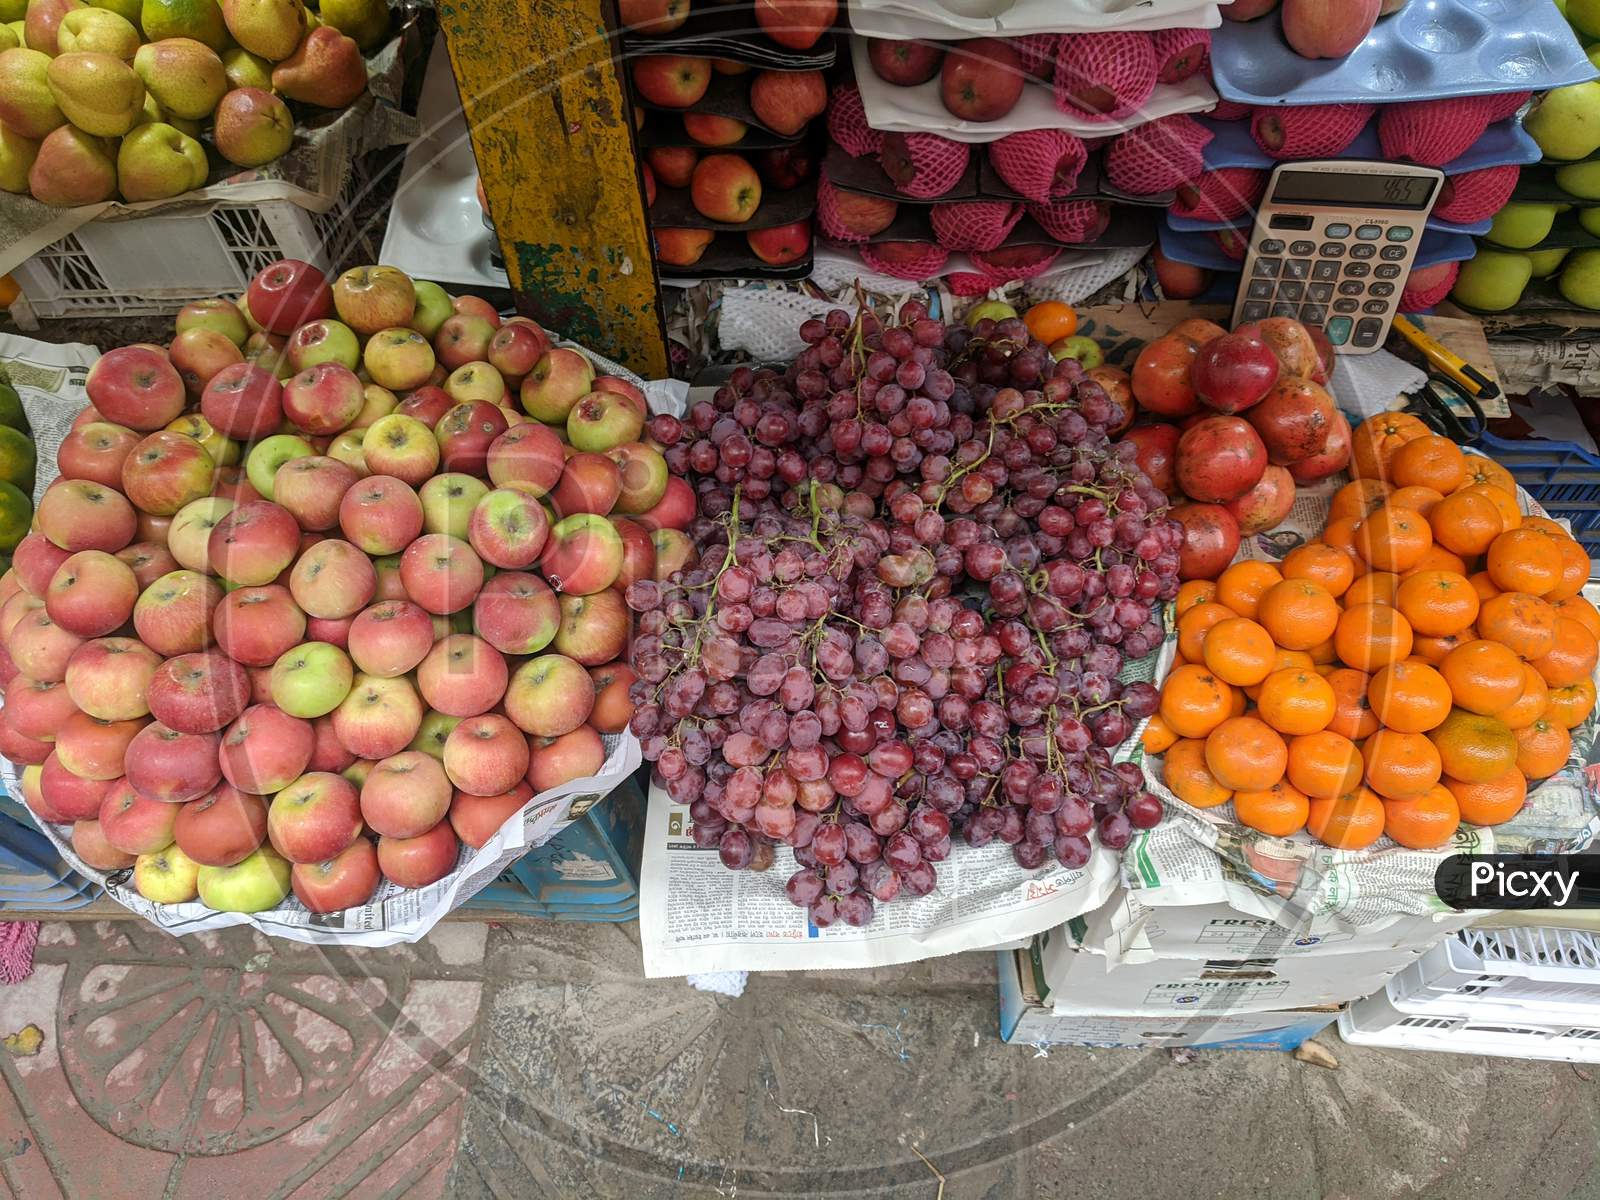 Retail Fruits of Bangladesh 23 Oct 2020.